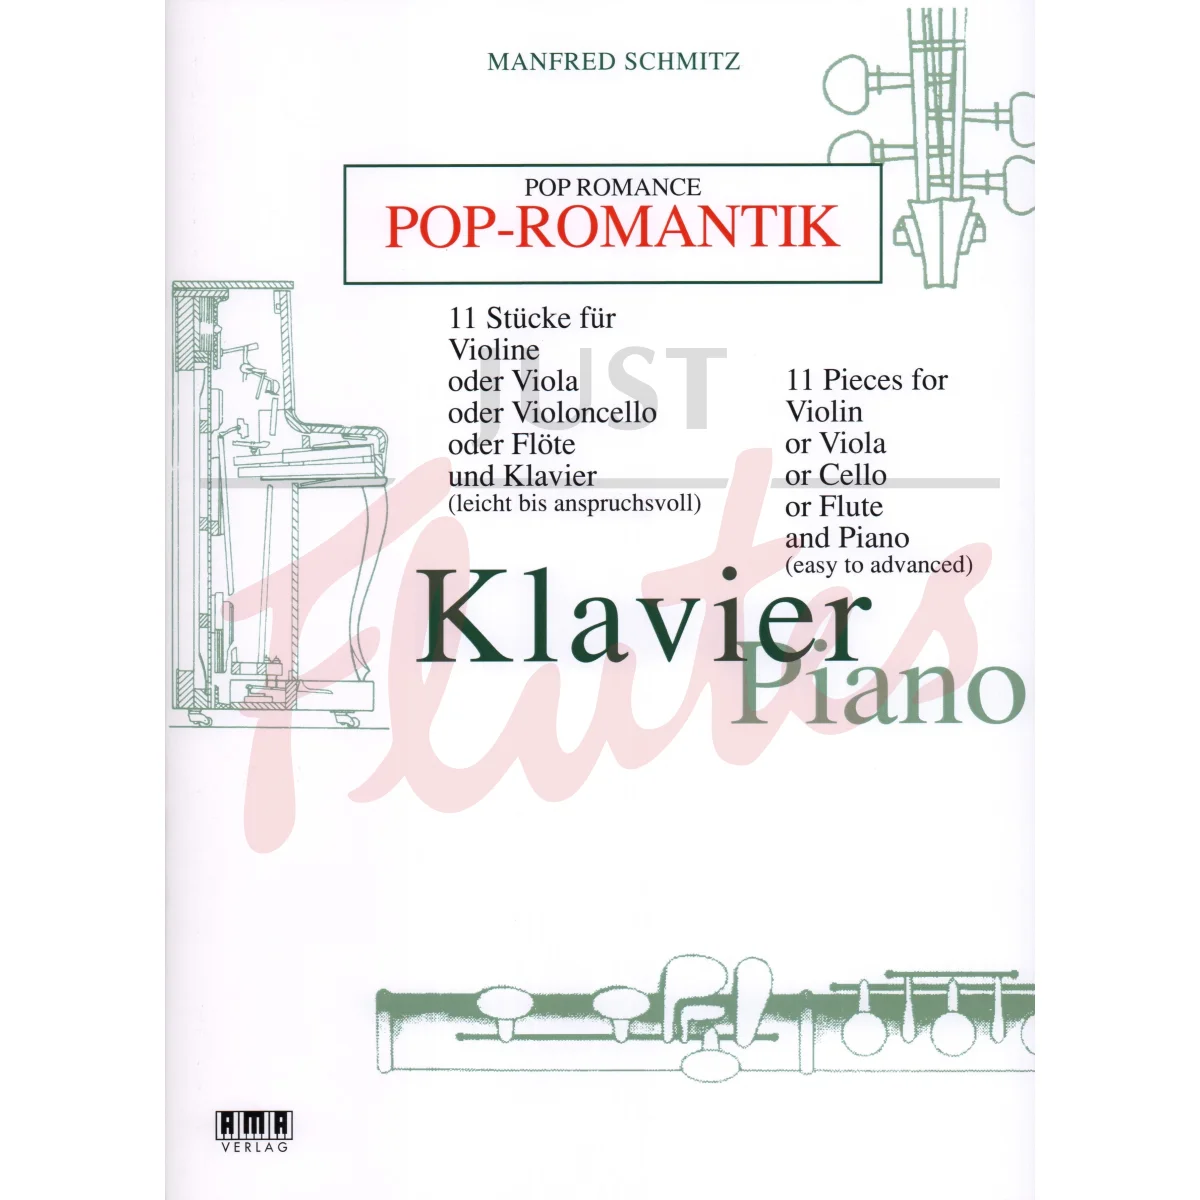 Pop Romance for Flute - Piano Accompaniment